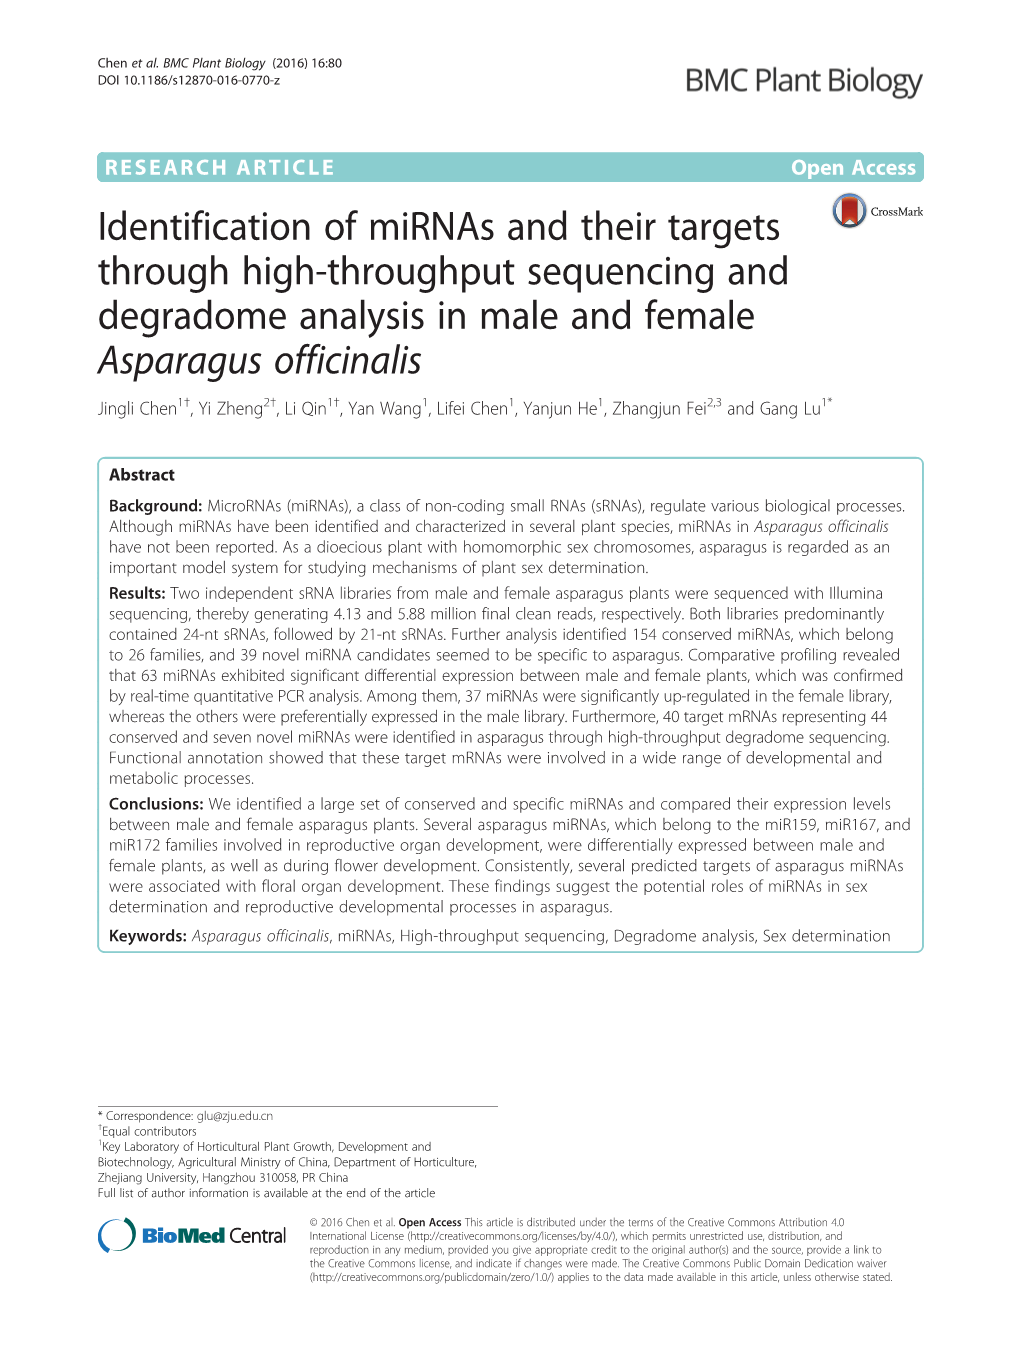 Identification of Mirnas and Their Targets Through High-Throughput